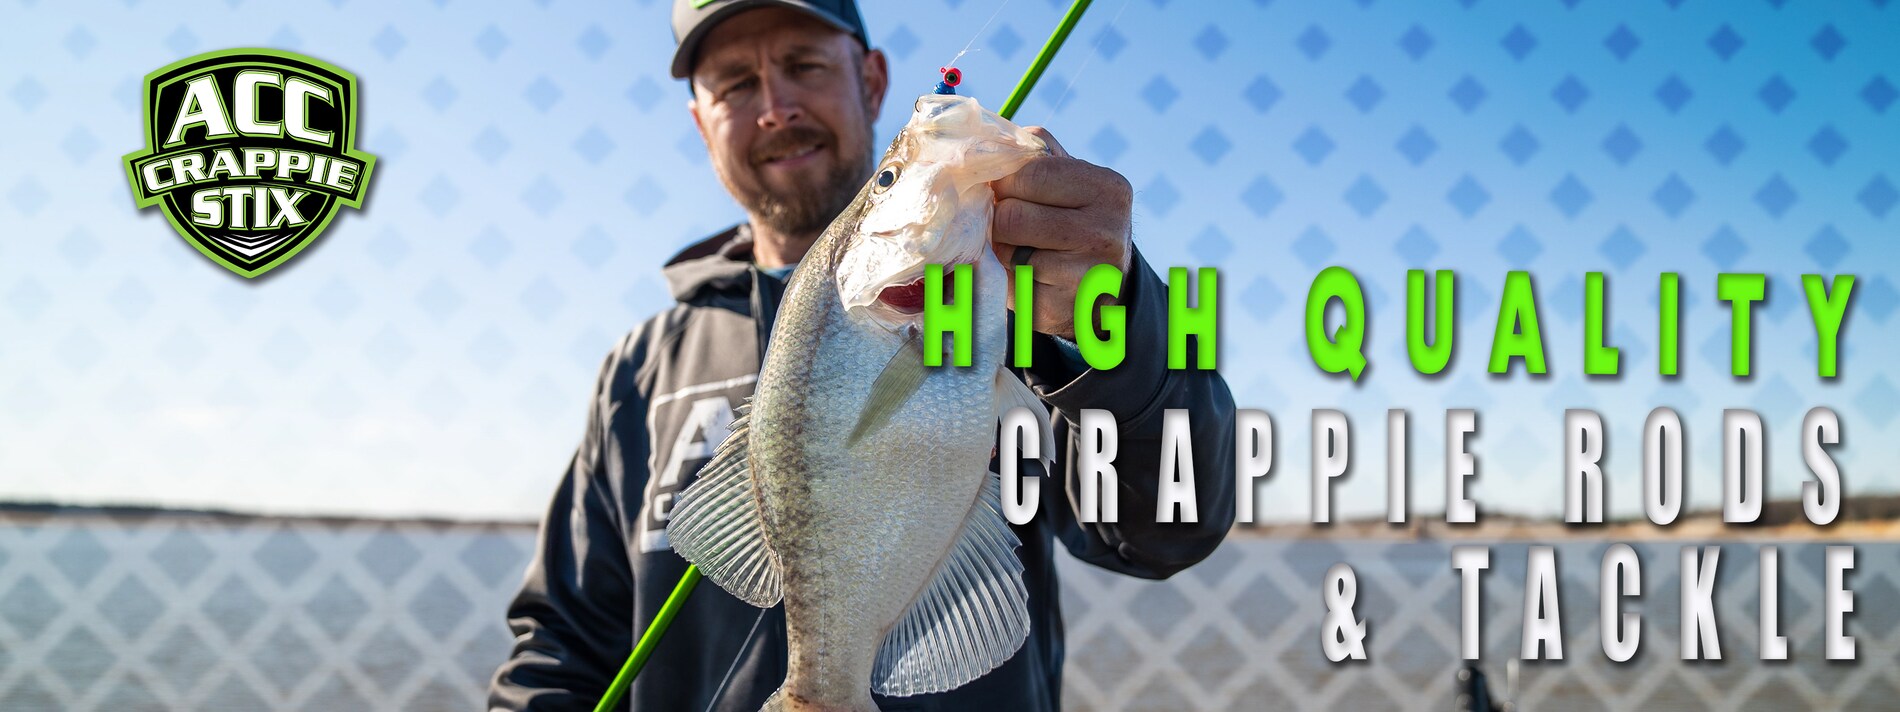 ACC Crappie Stix: Fishing Lures, Fishing Rods, Ice Fishing